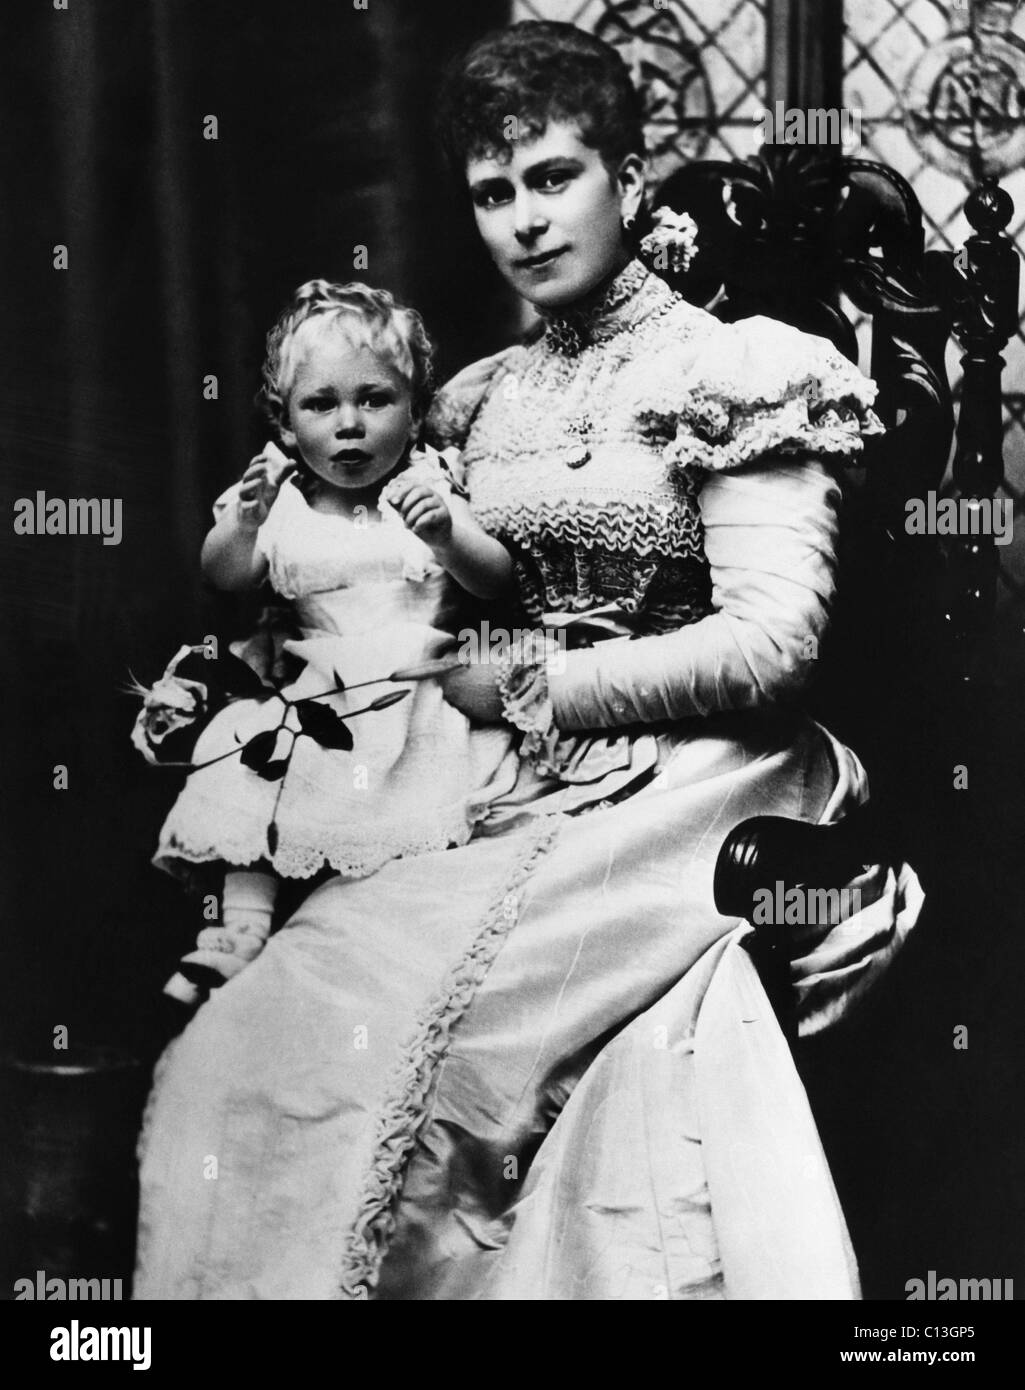 British Royalty. British Prince Albert (future King George VI) and Mary, Duchess of York, (future British Queen Mary of Teck), circa 1896. Stock Photo